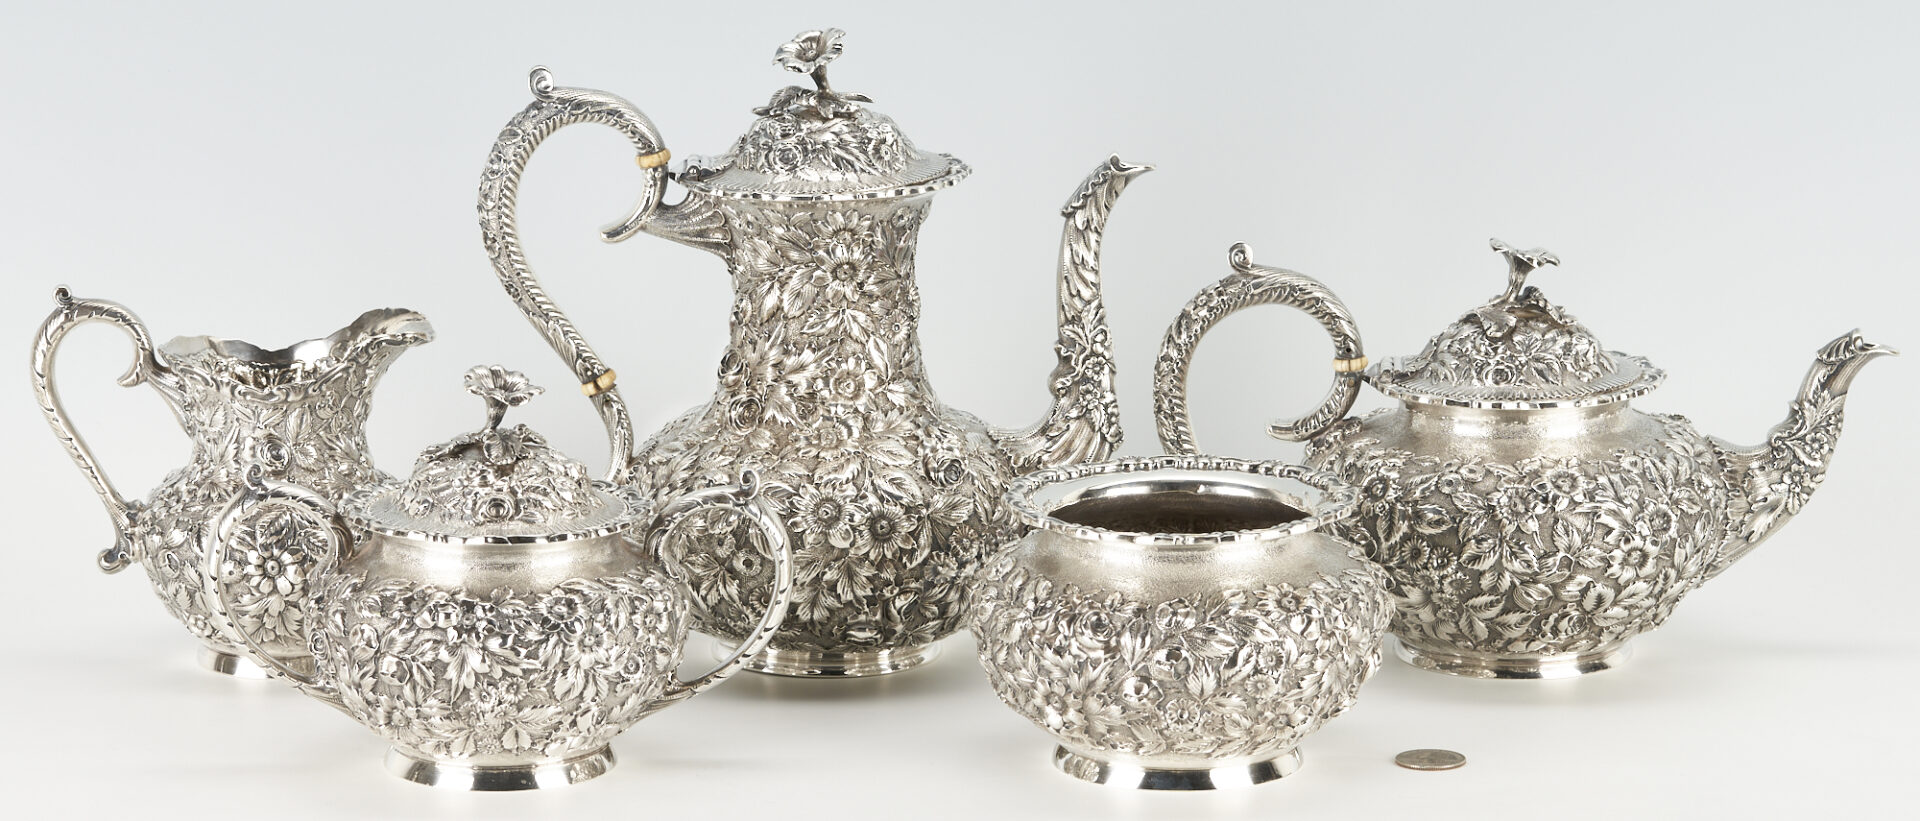 Lot 47: 5-Piece Baltimore Repousse Sterling Silver Tea Set, c. 1900